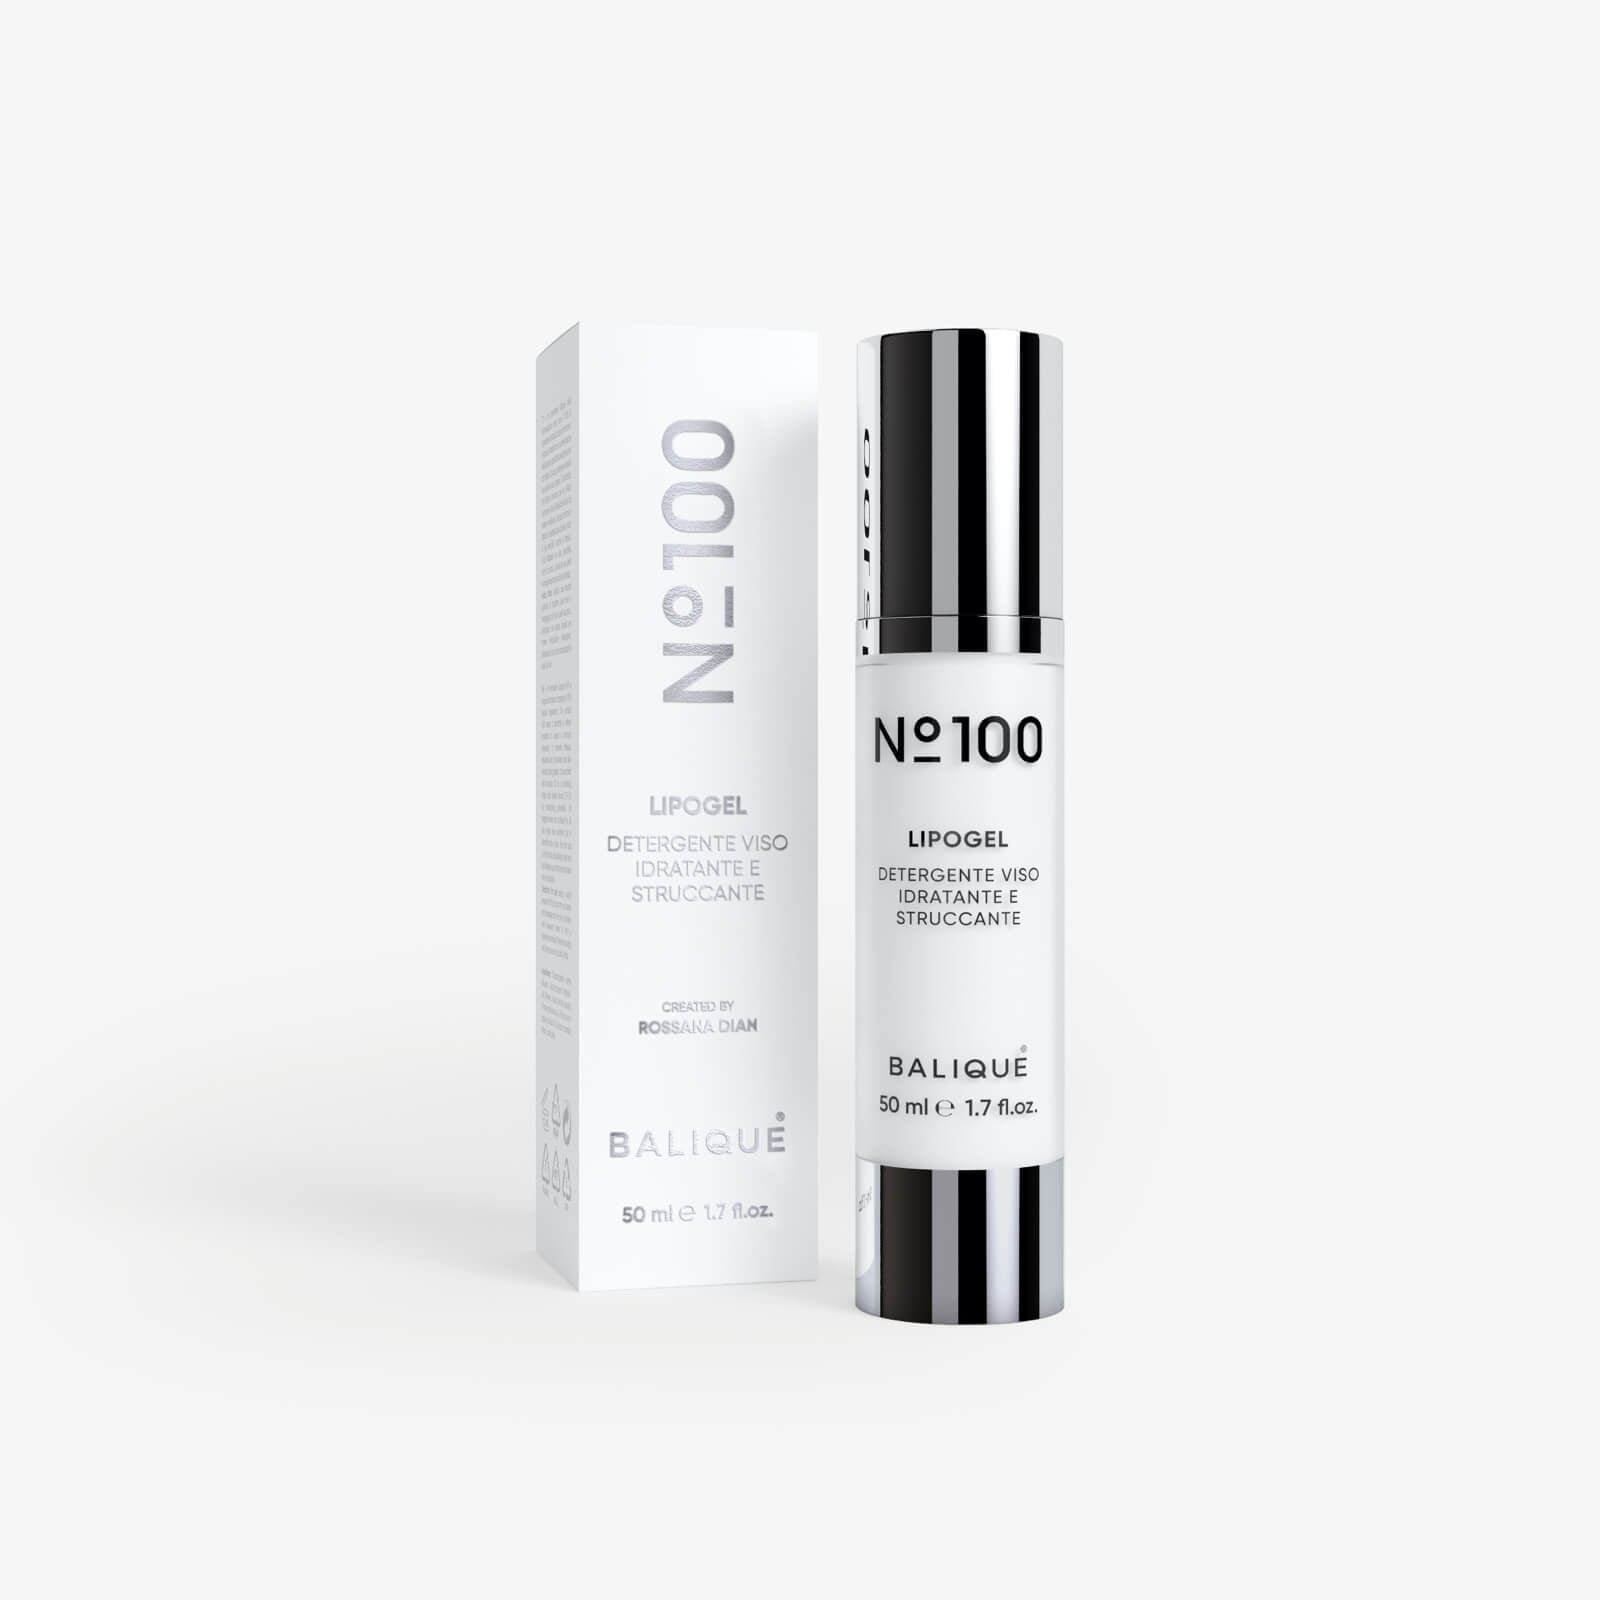 N°100 LIPOGEL - Moisturizing face cleanser and make-up remover - 50ml 